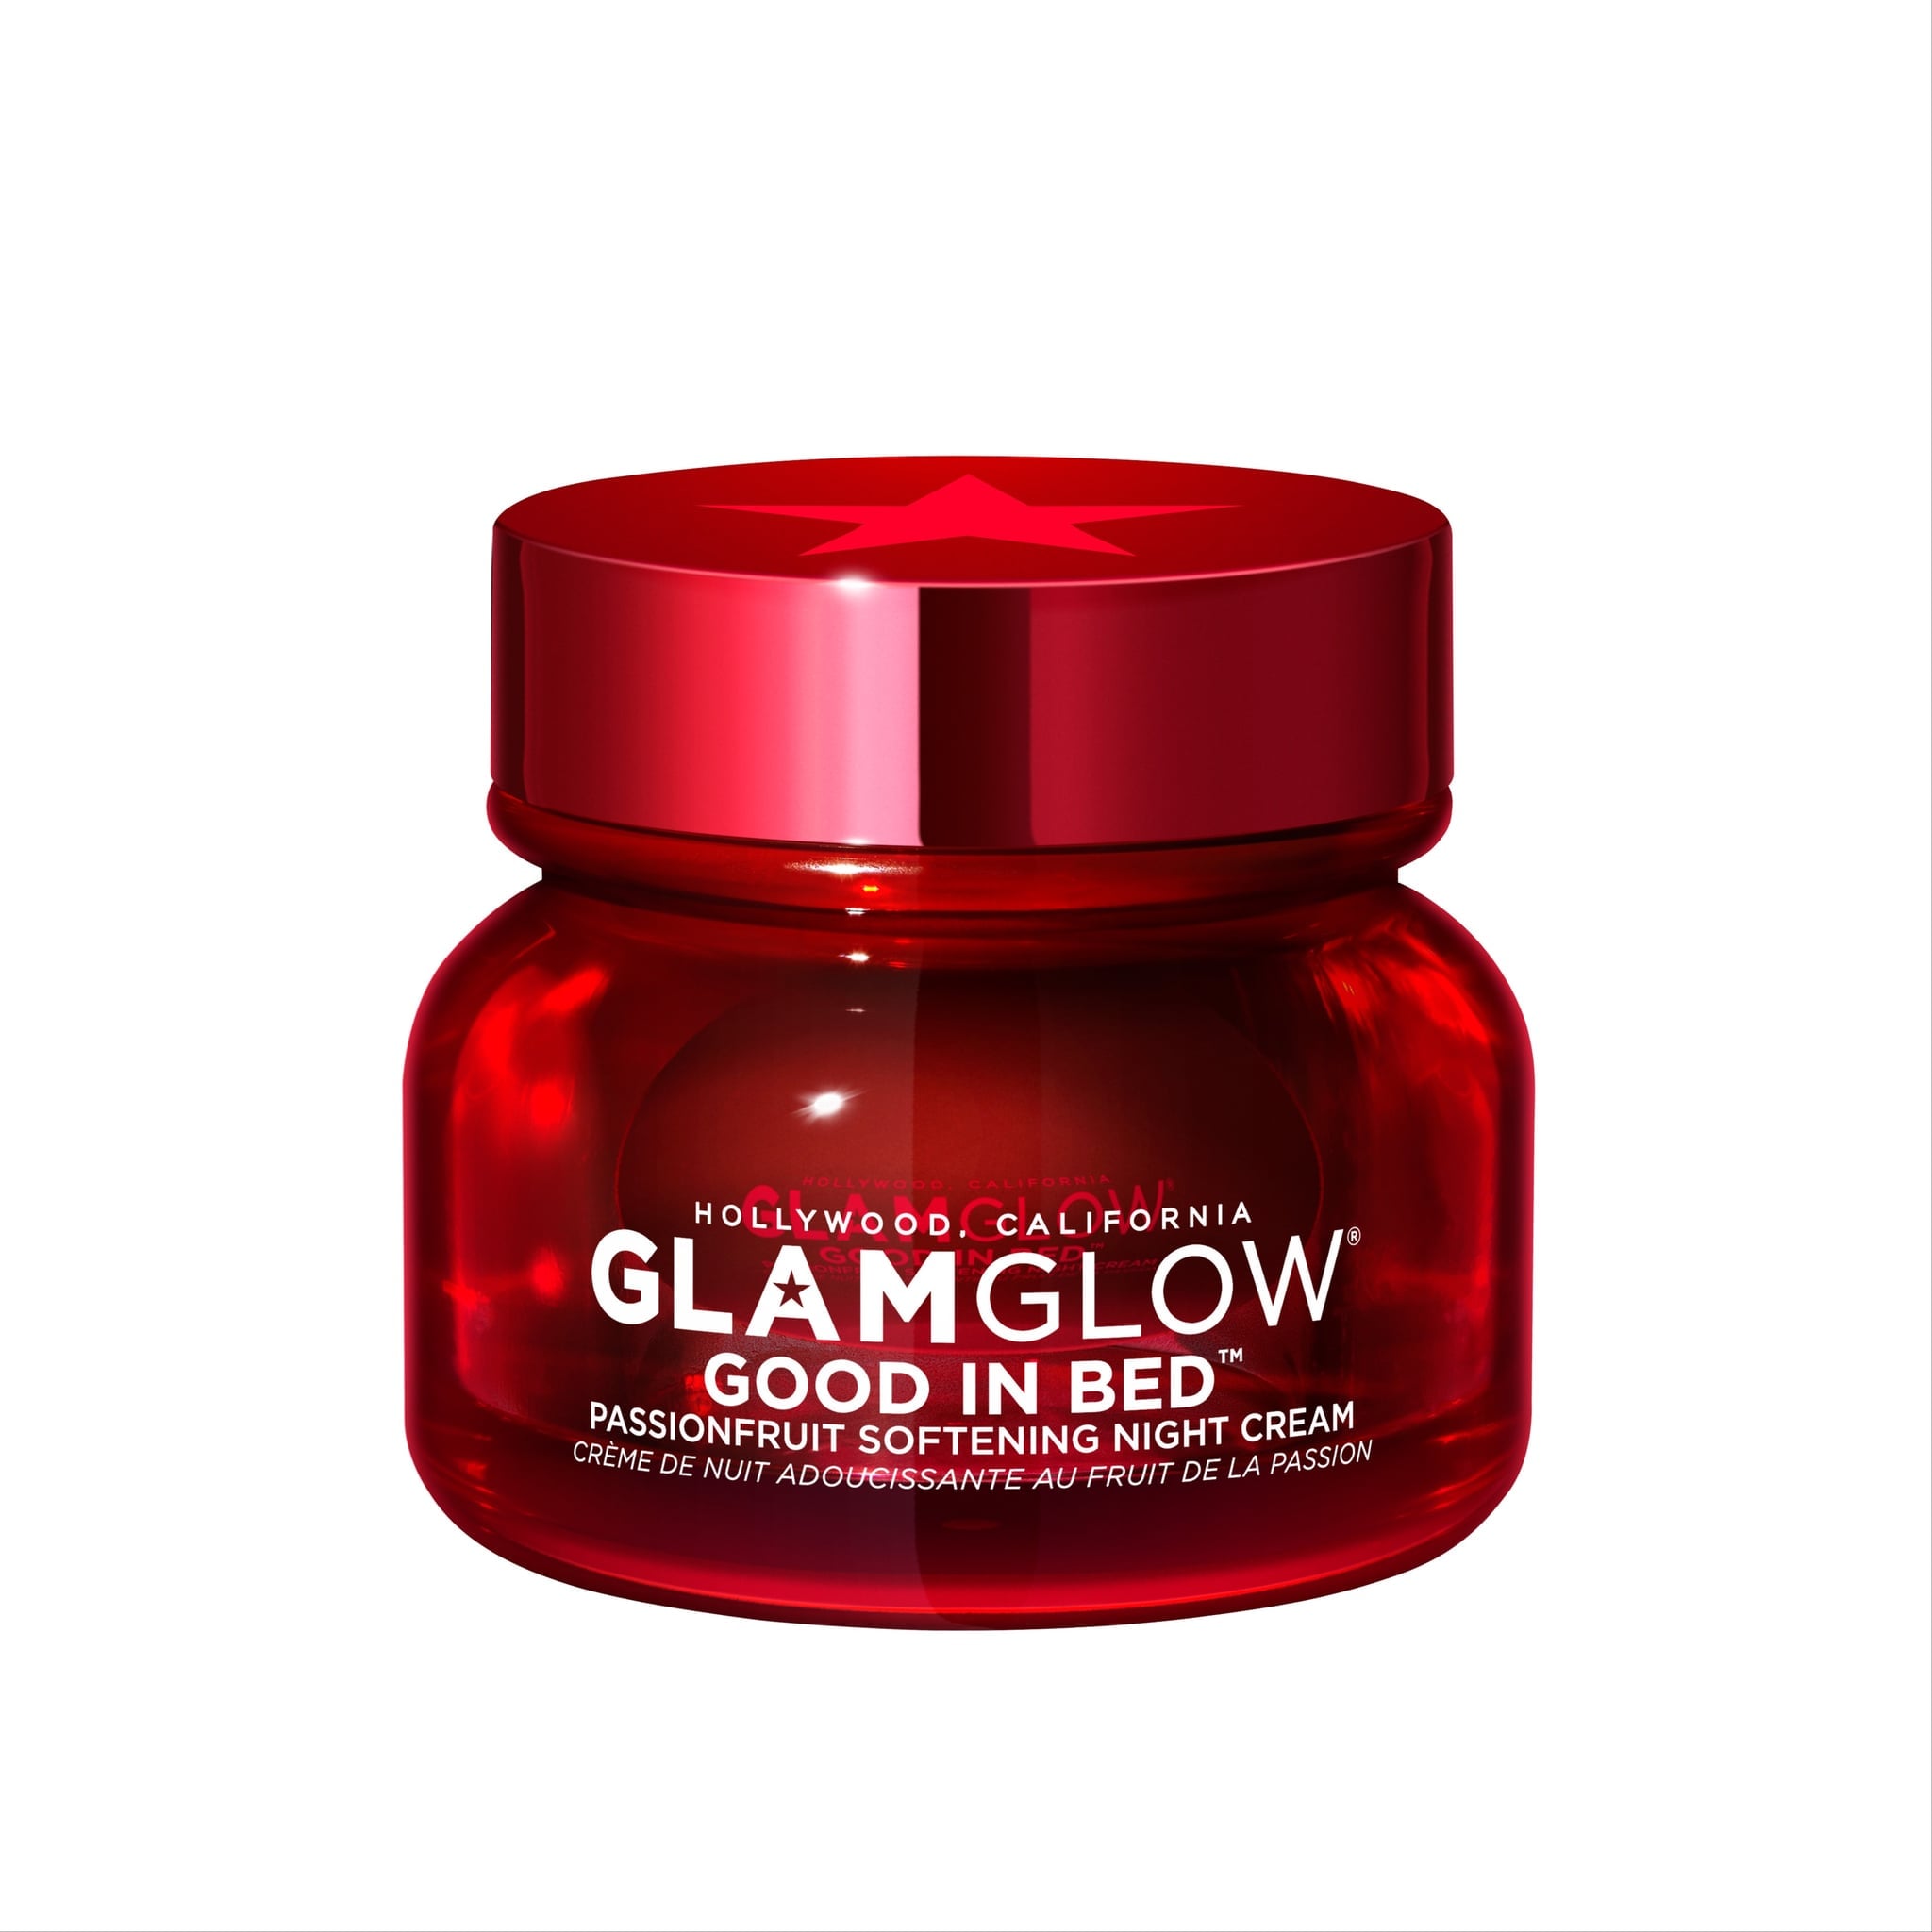 Glamglow Good in Bed Skin-Softening Cream Review | POPSUGAR